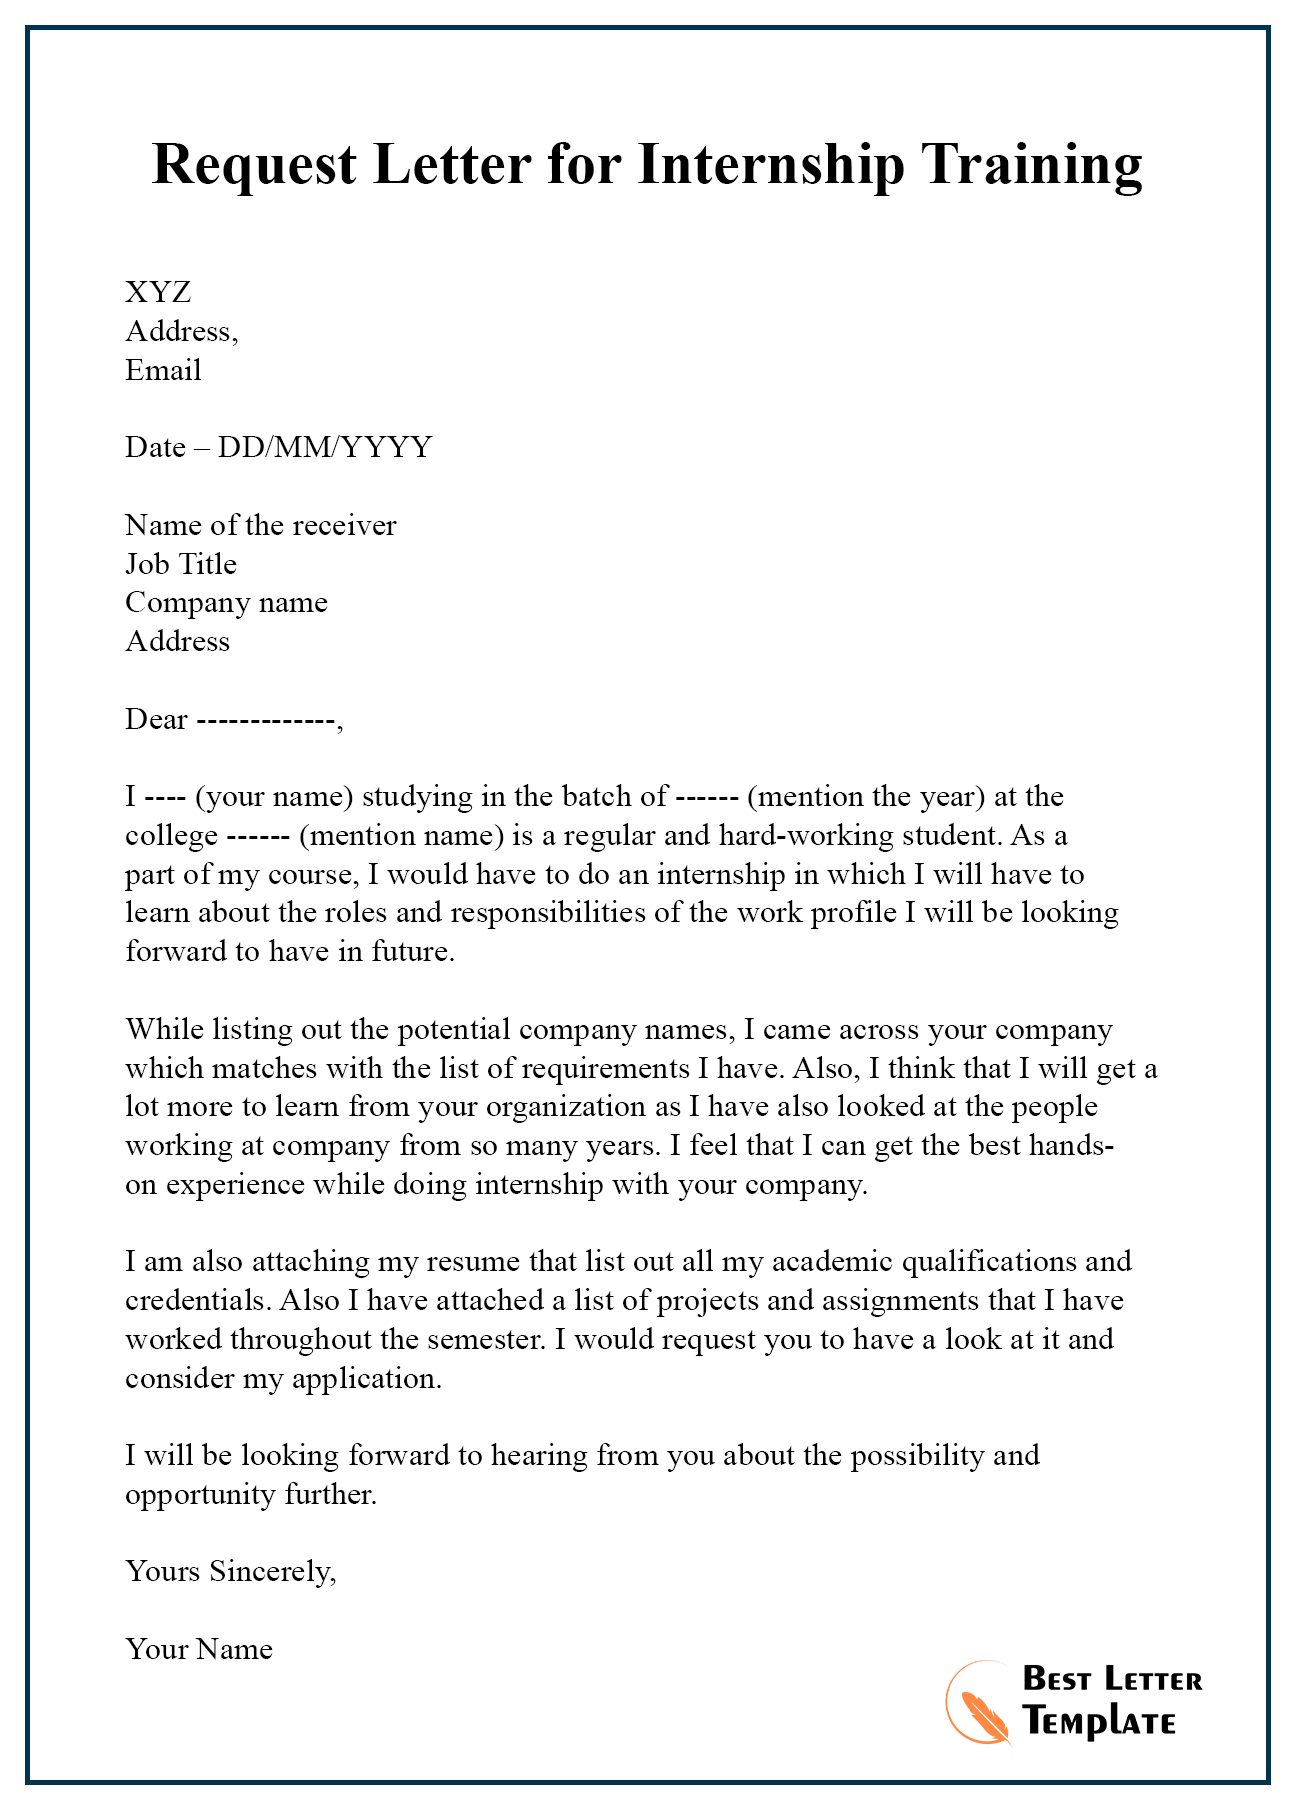 application letter on job training